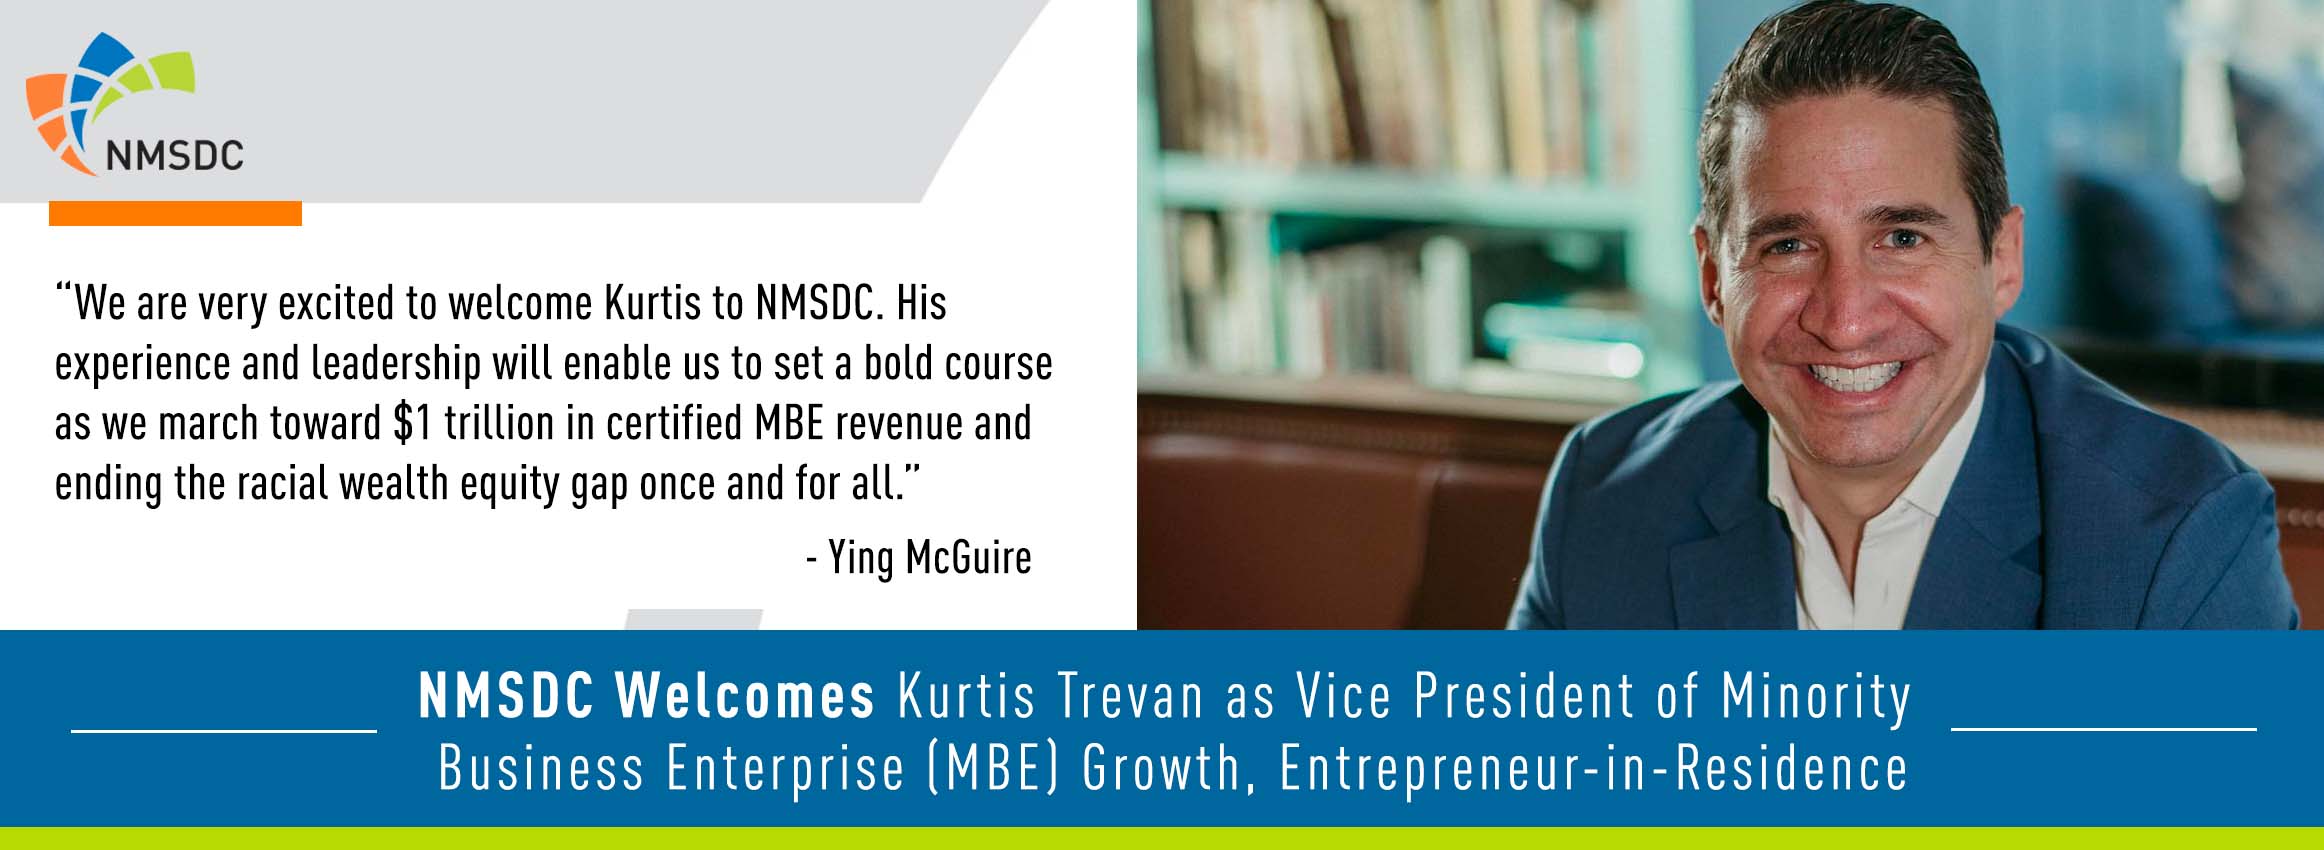 NMSDC Welcomes Kurtis Trevan as Vice President of Minority Business Enterprise (MBE) Growth, Entrepreneur-in-Residence